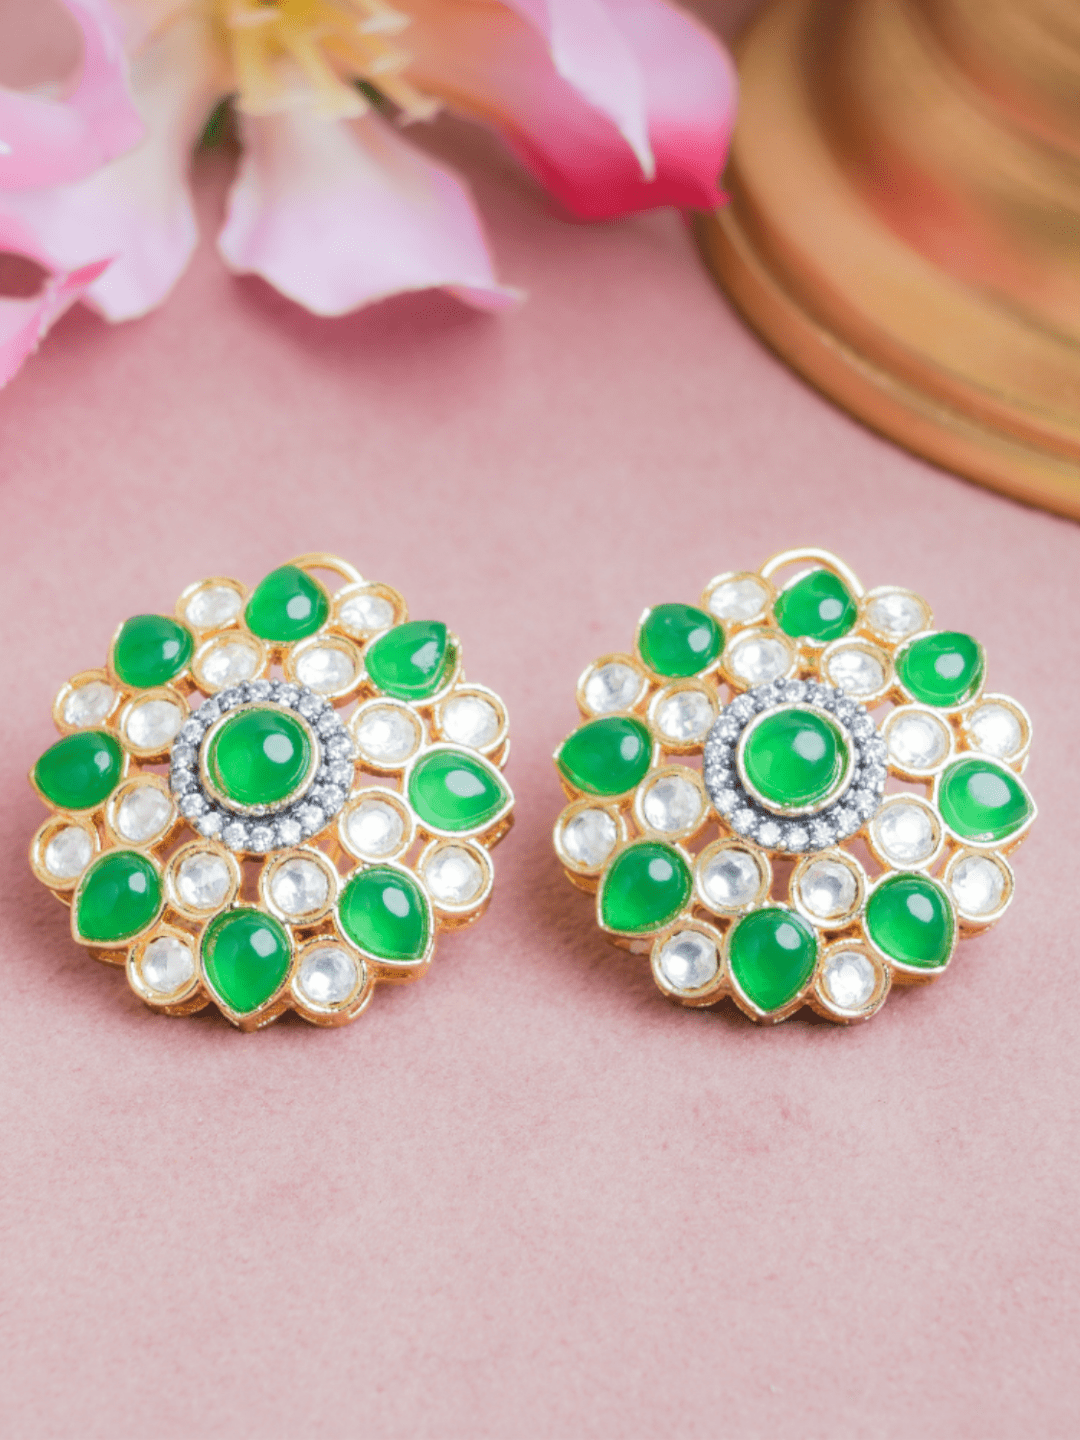 Designer American Diamond Stud Earrings with Green Stones NS02260071